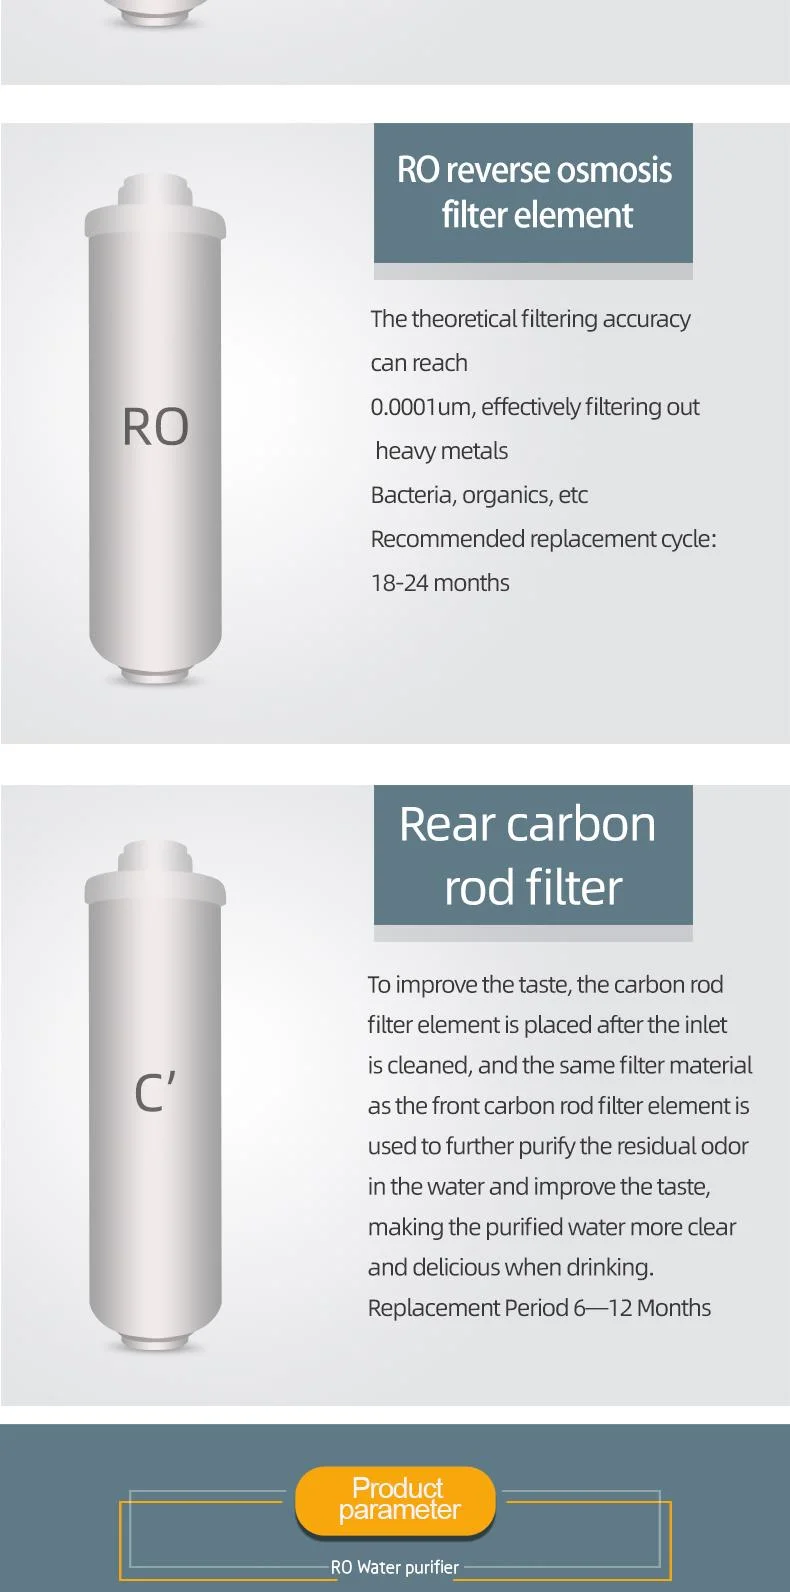 Shower Filter for Hard Water/Water Filter System for Home/UV Water Filter/Portable Water Filter/Pure Water Filter/Water Purifier Filter/House Water Filter